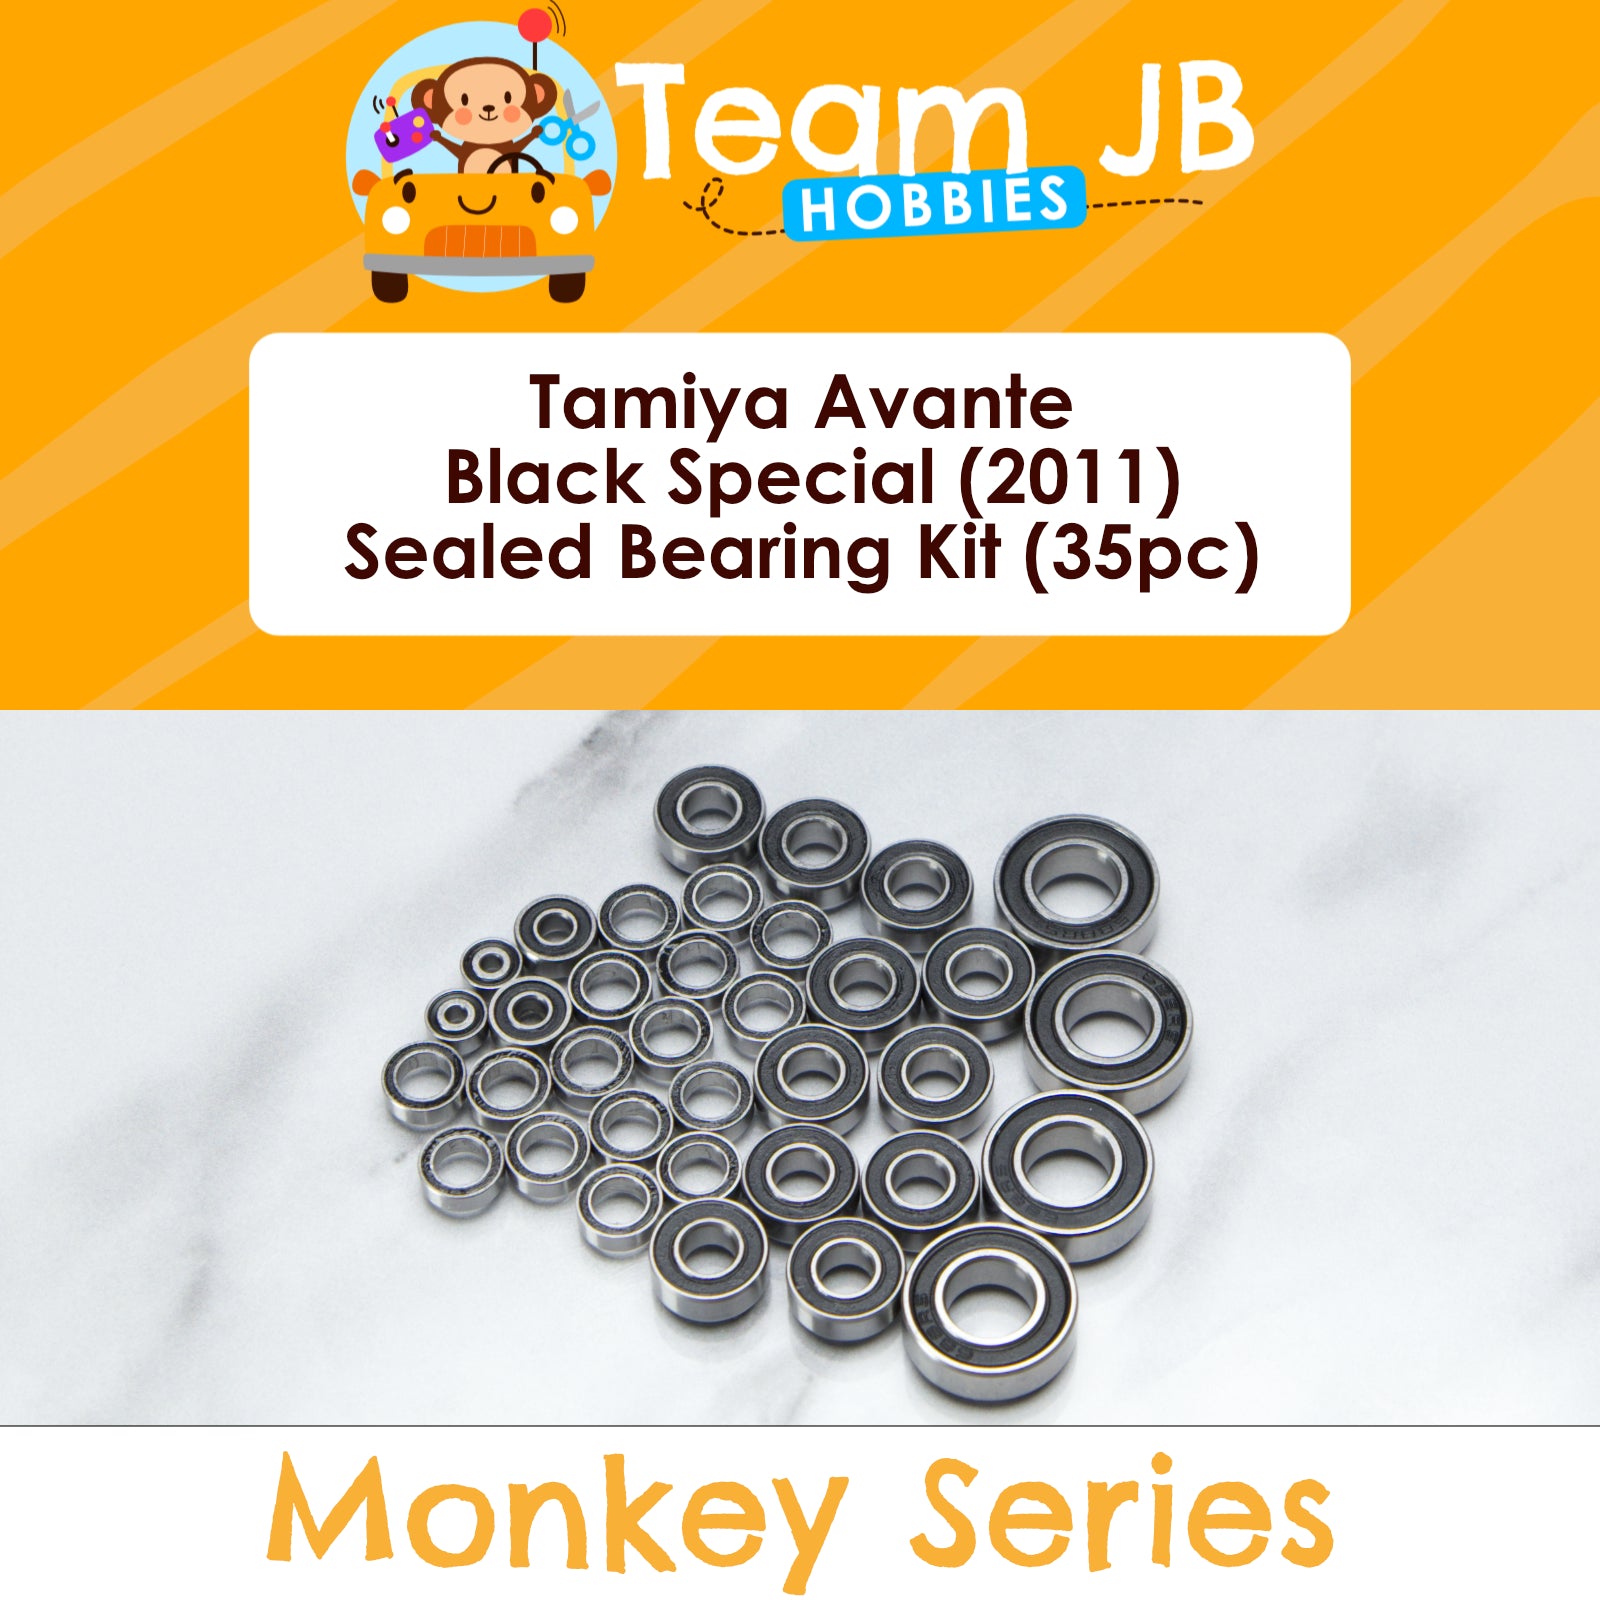 Tamiya Avante Black Special (2011) - Sealed Bearing Kit